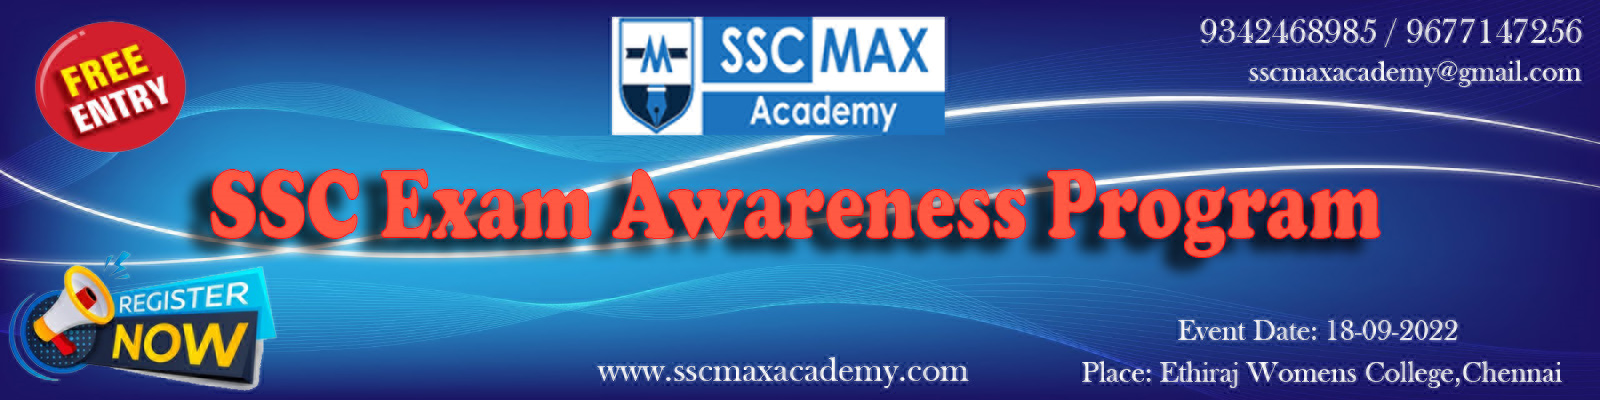 SSC Exam Awareness Event 2022